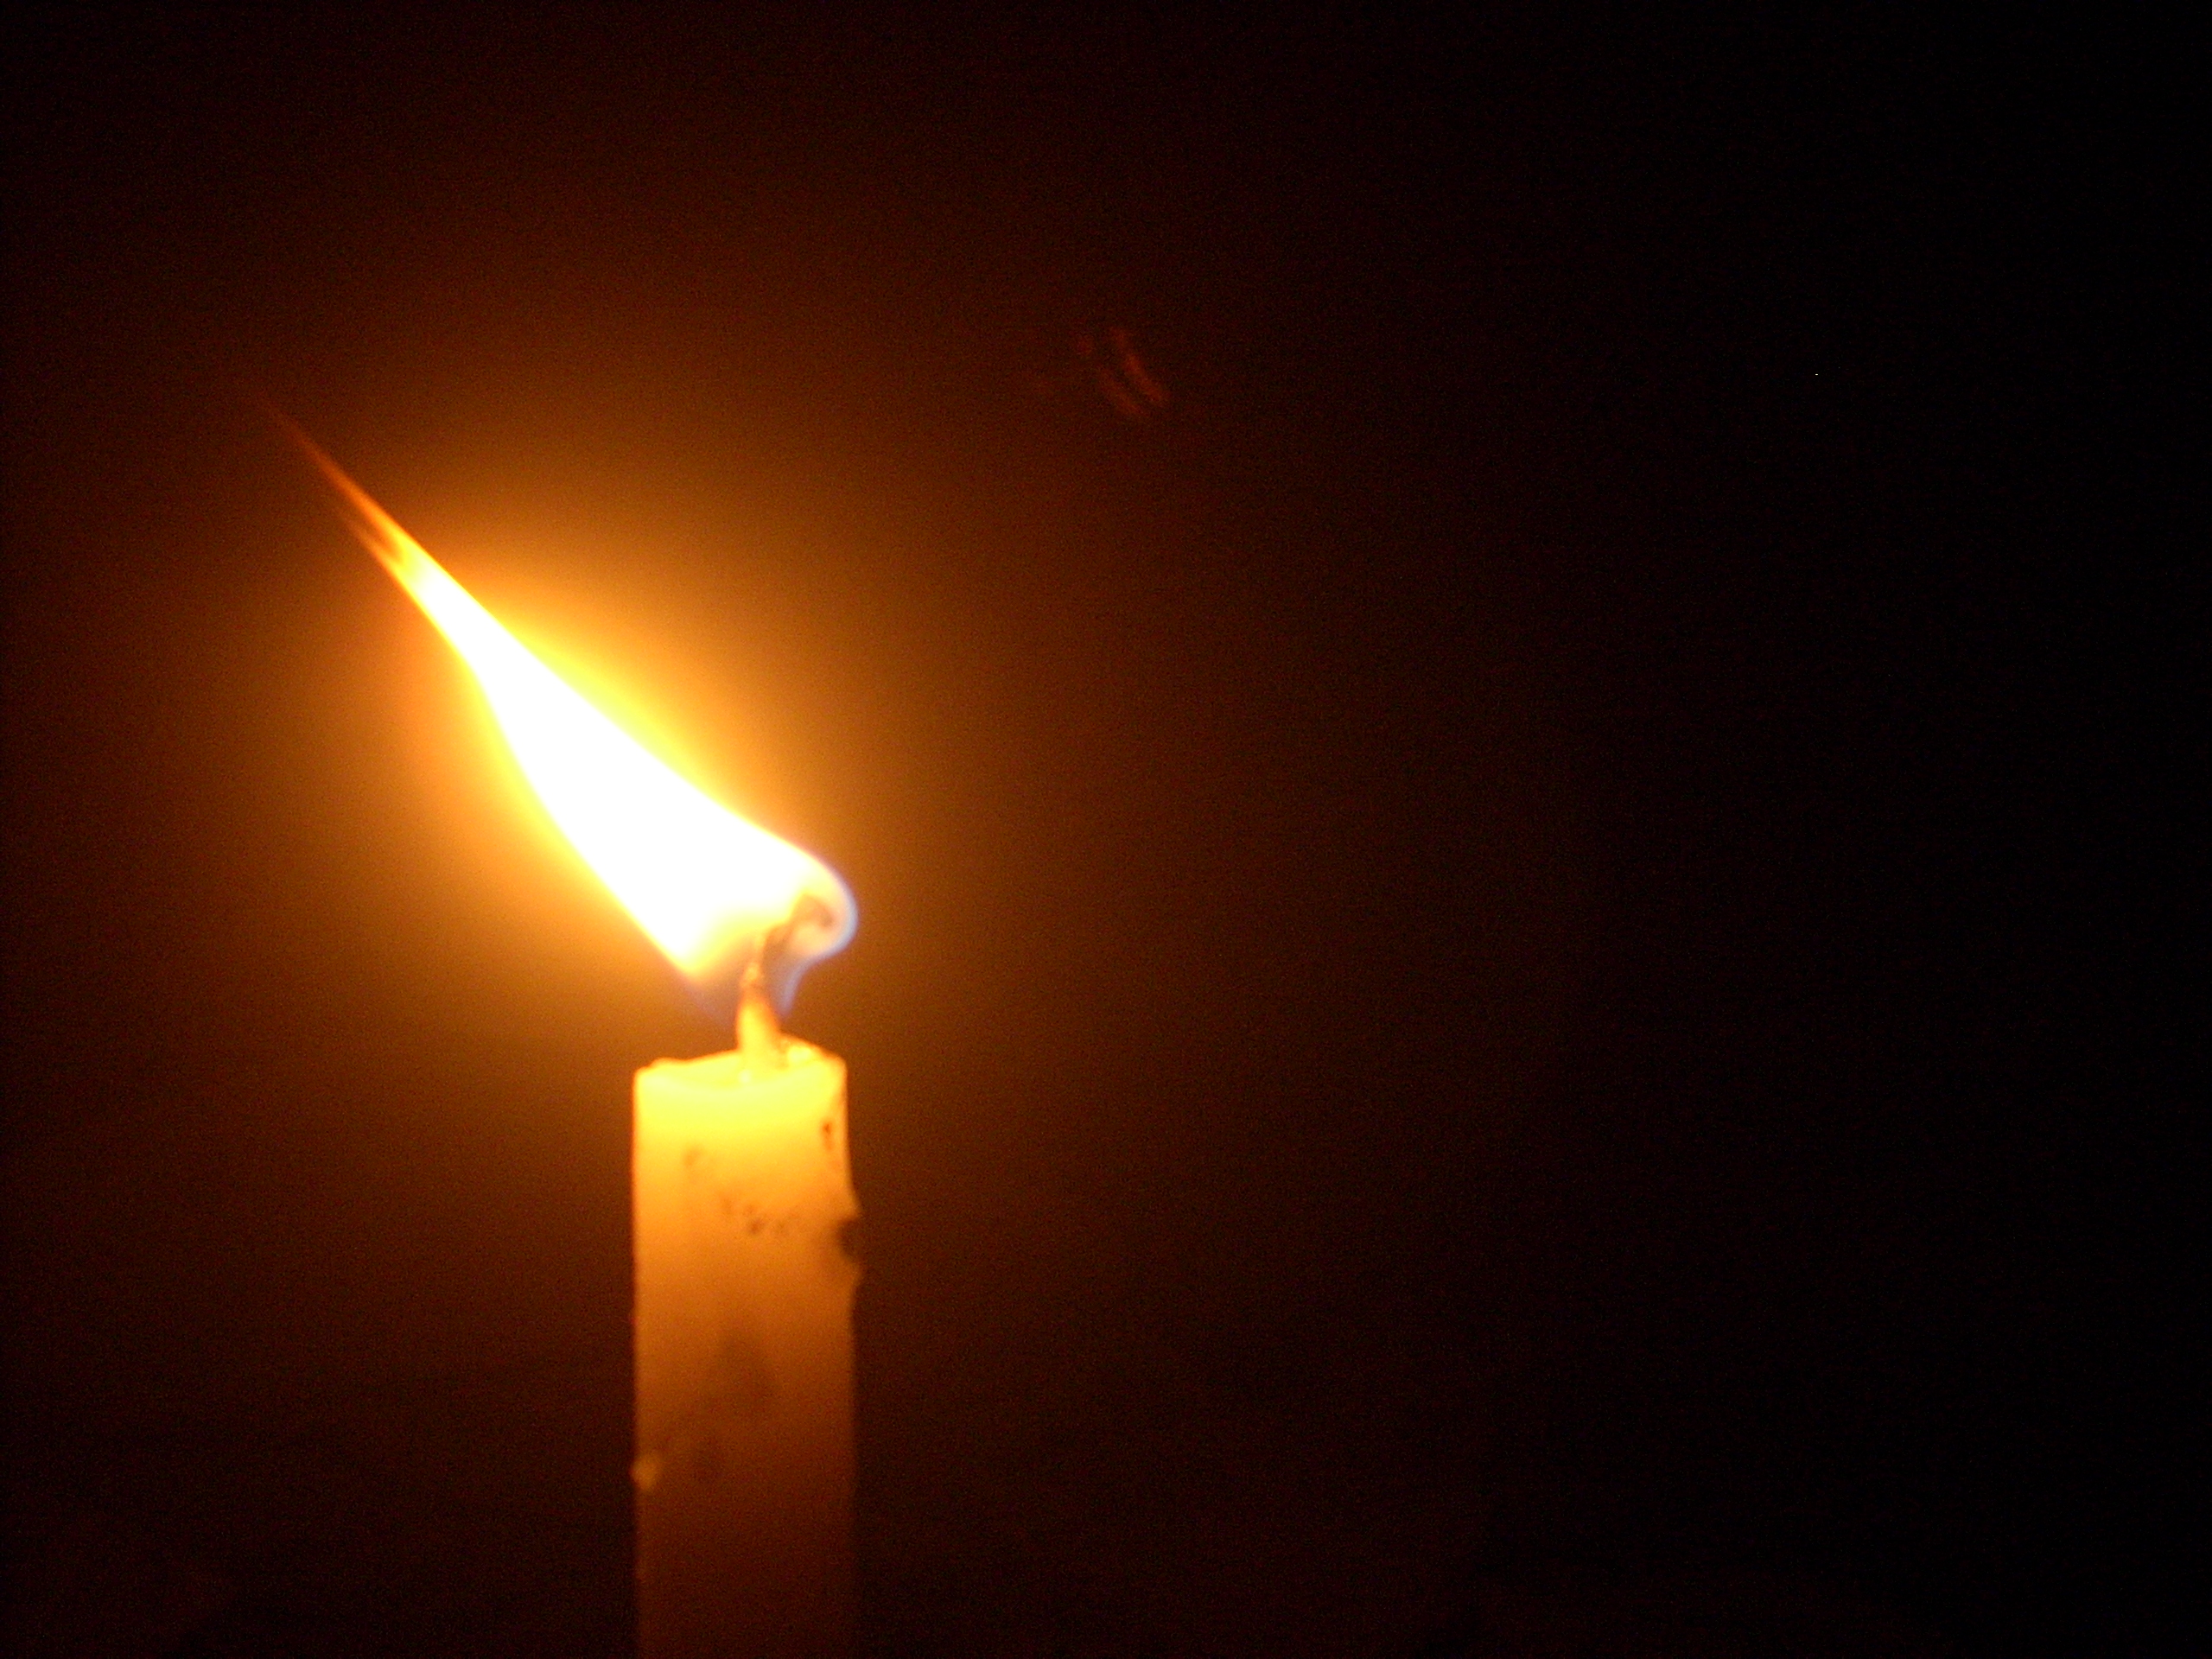 File:Candle light മെഴുകുതിരി നാളം.JPG - Wikimedia Commons